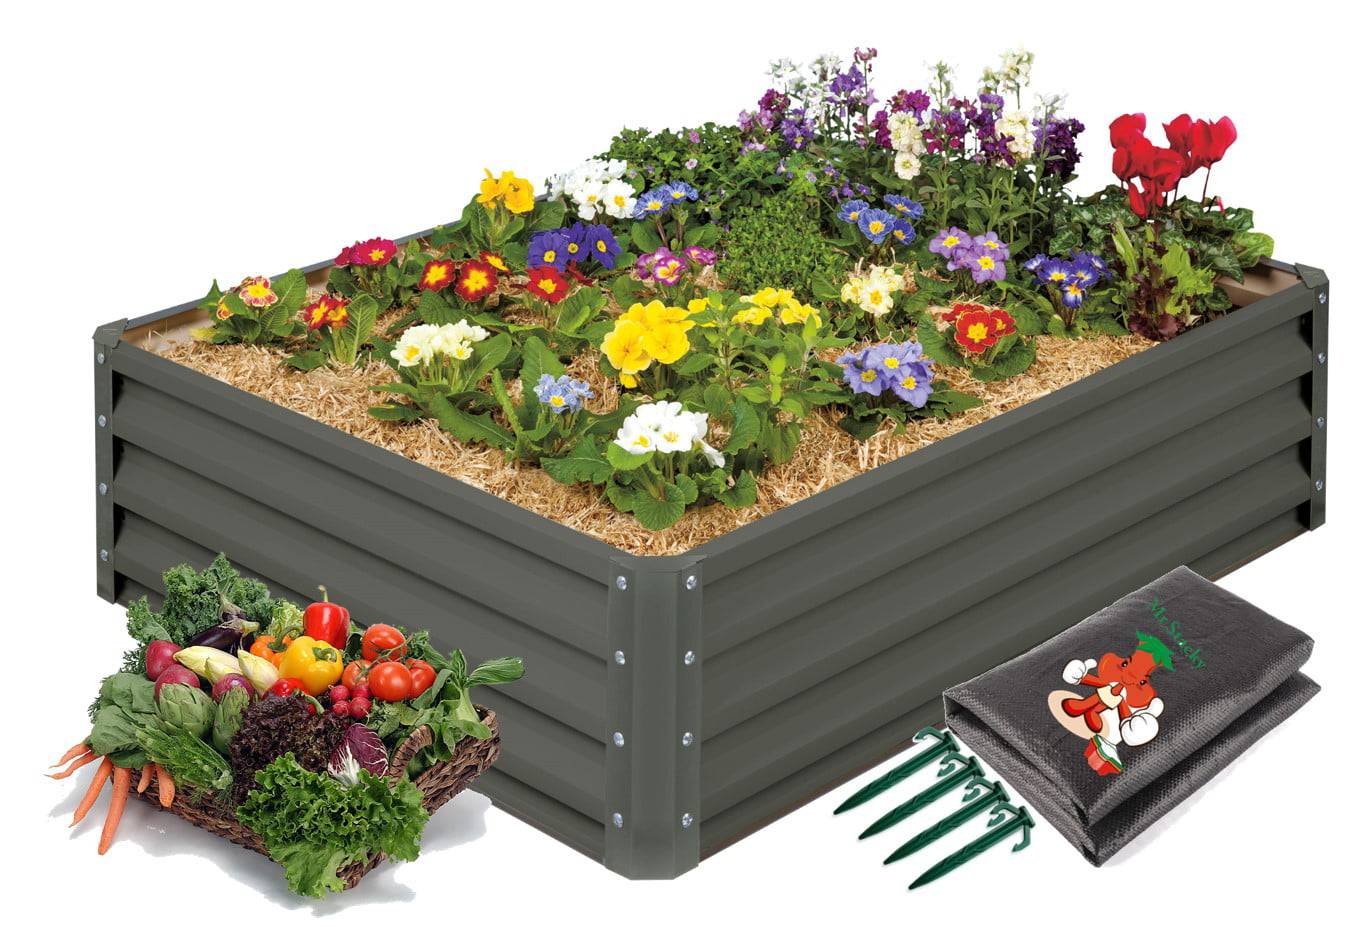 Tier Wooden Raised Elevated Garden Bed Planter Box Kit Flower